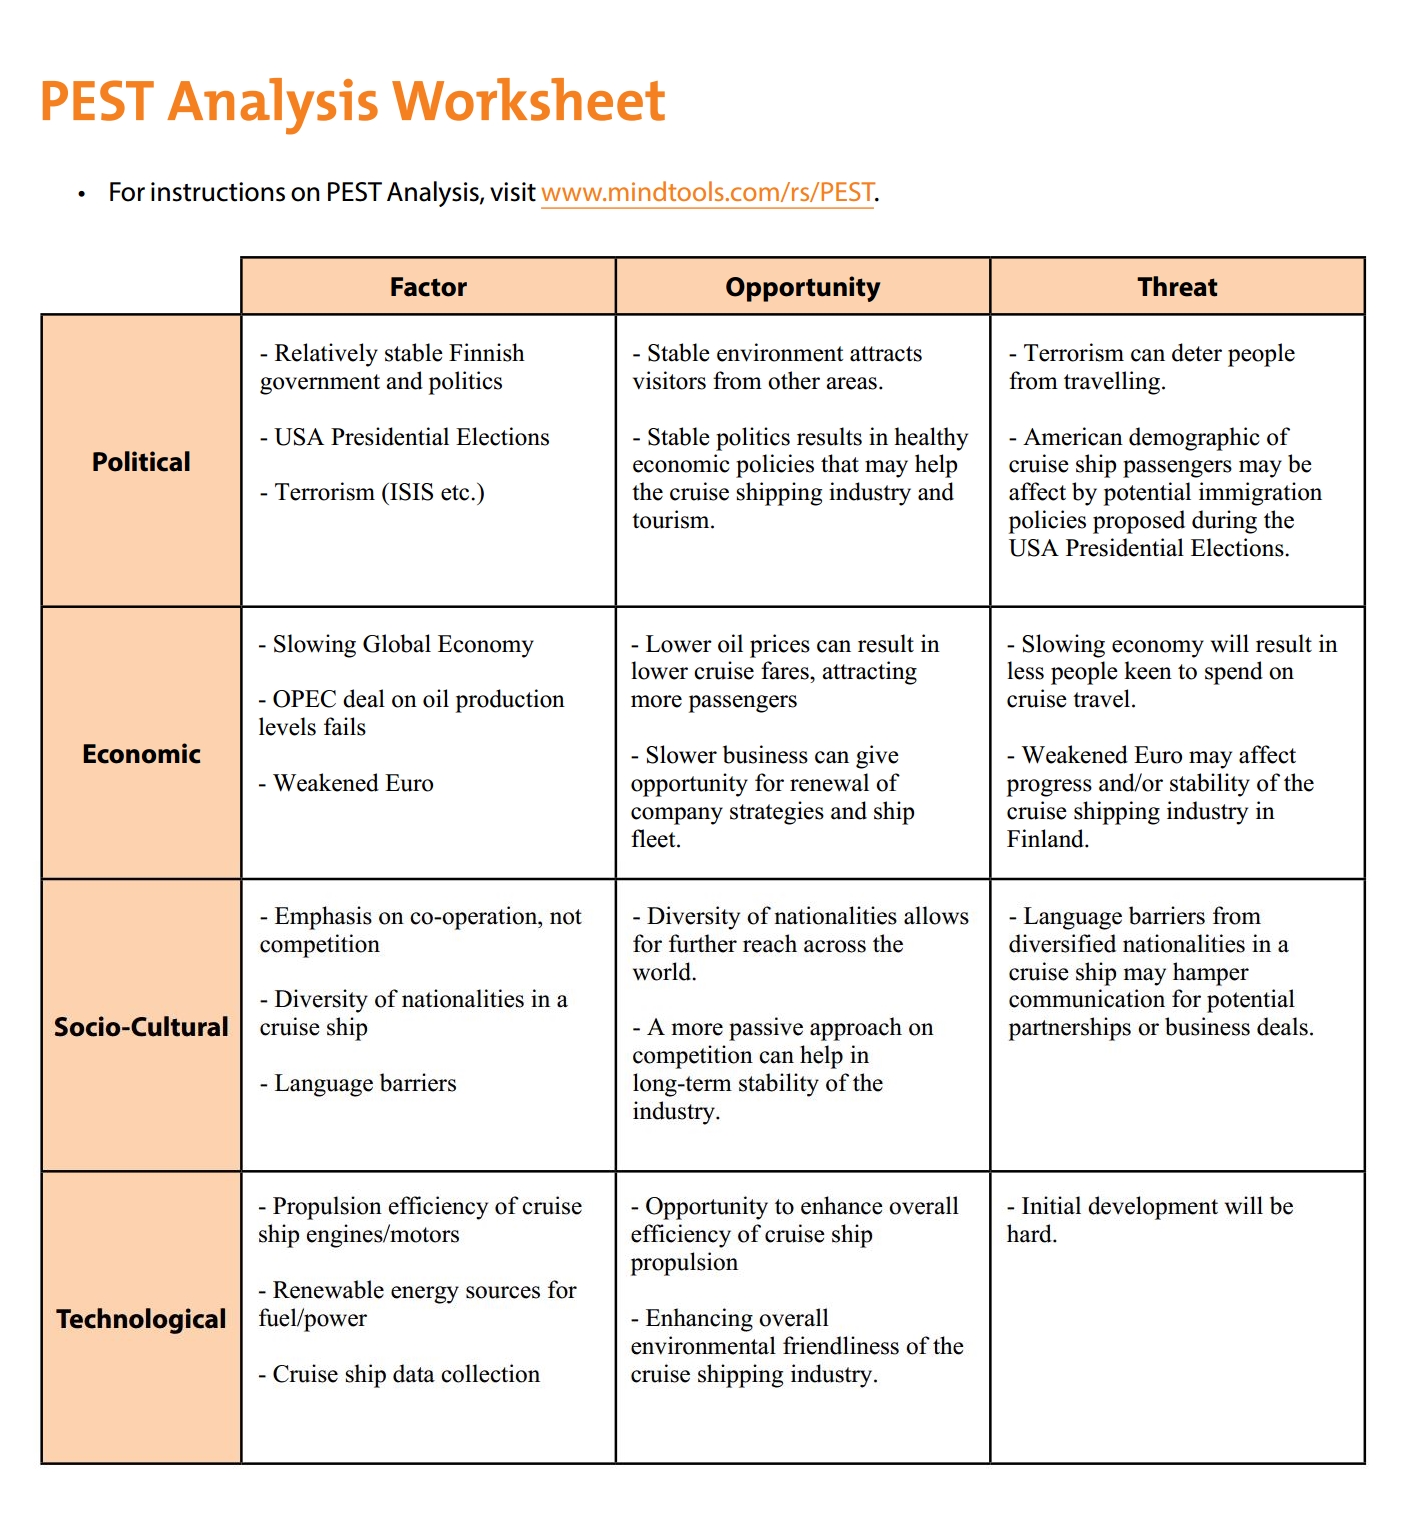 Pest analysis of snapple case study